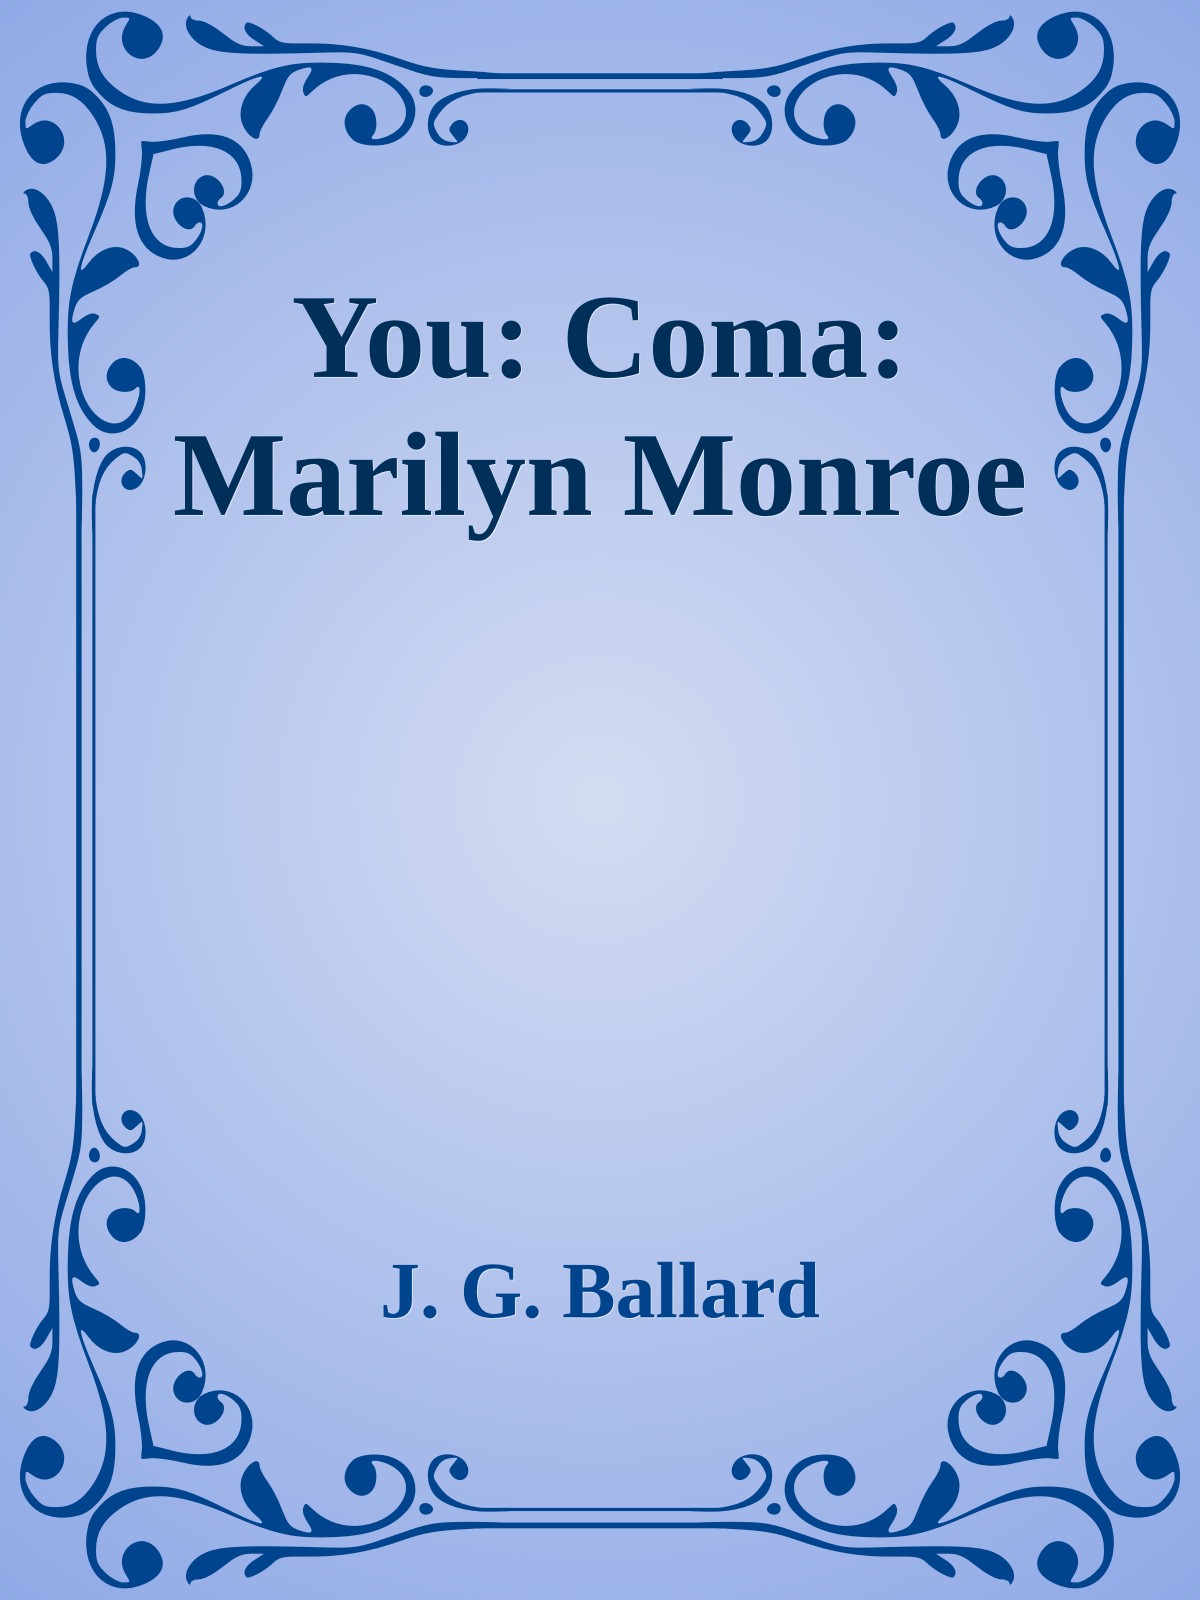 You: Coma: Marilyn Monroe